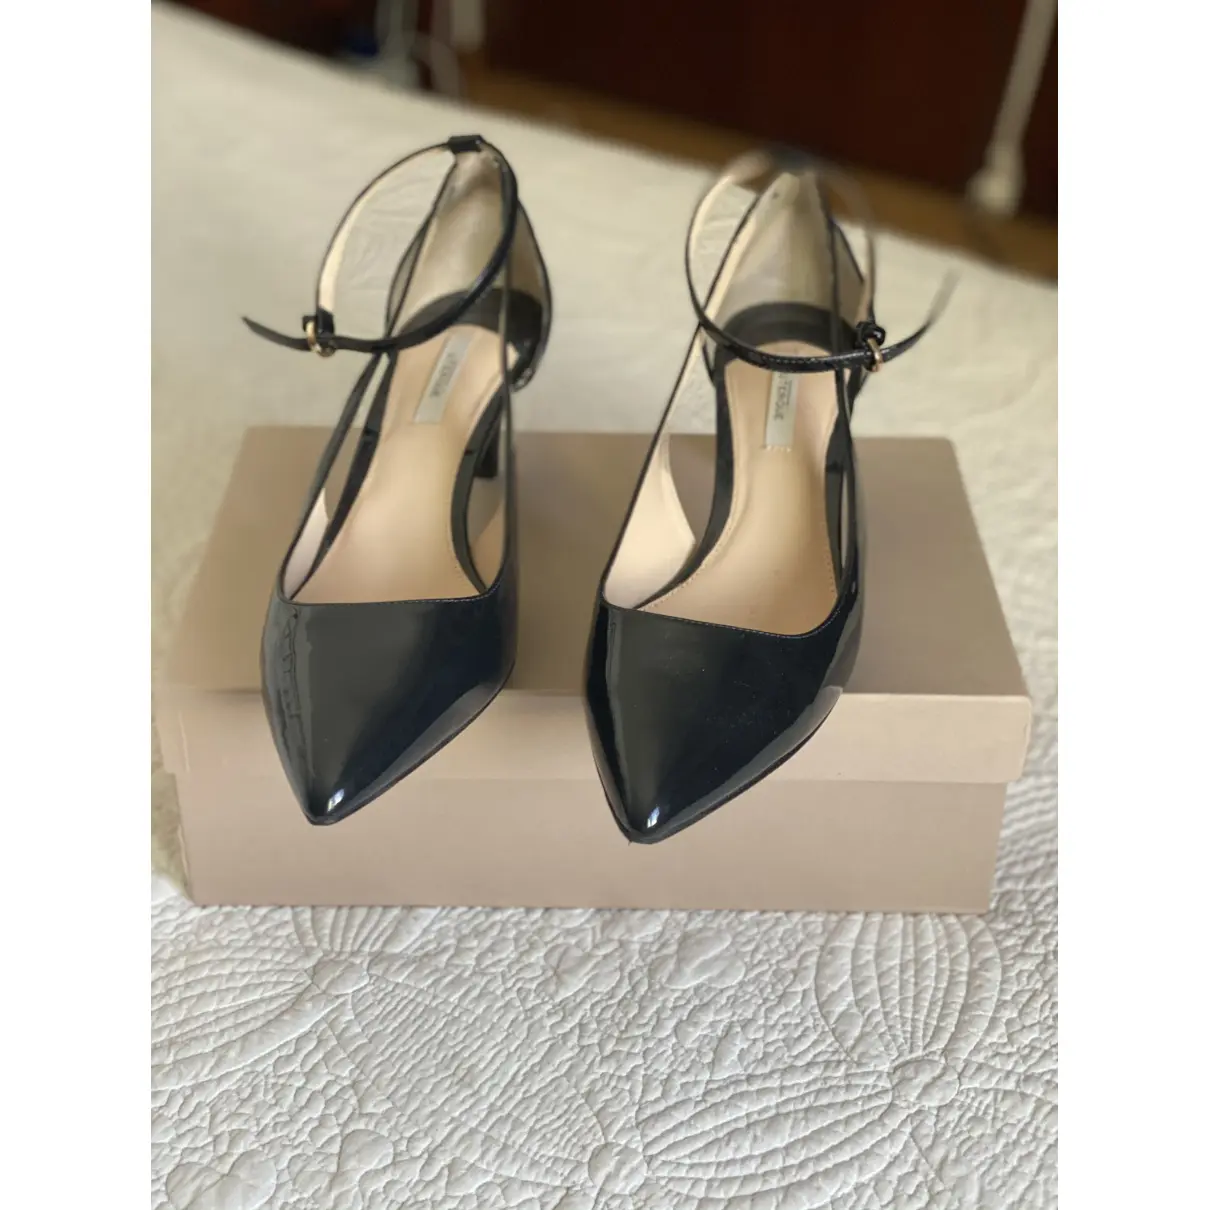 Buy Uterque Patent leather heels online